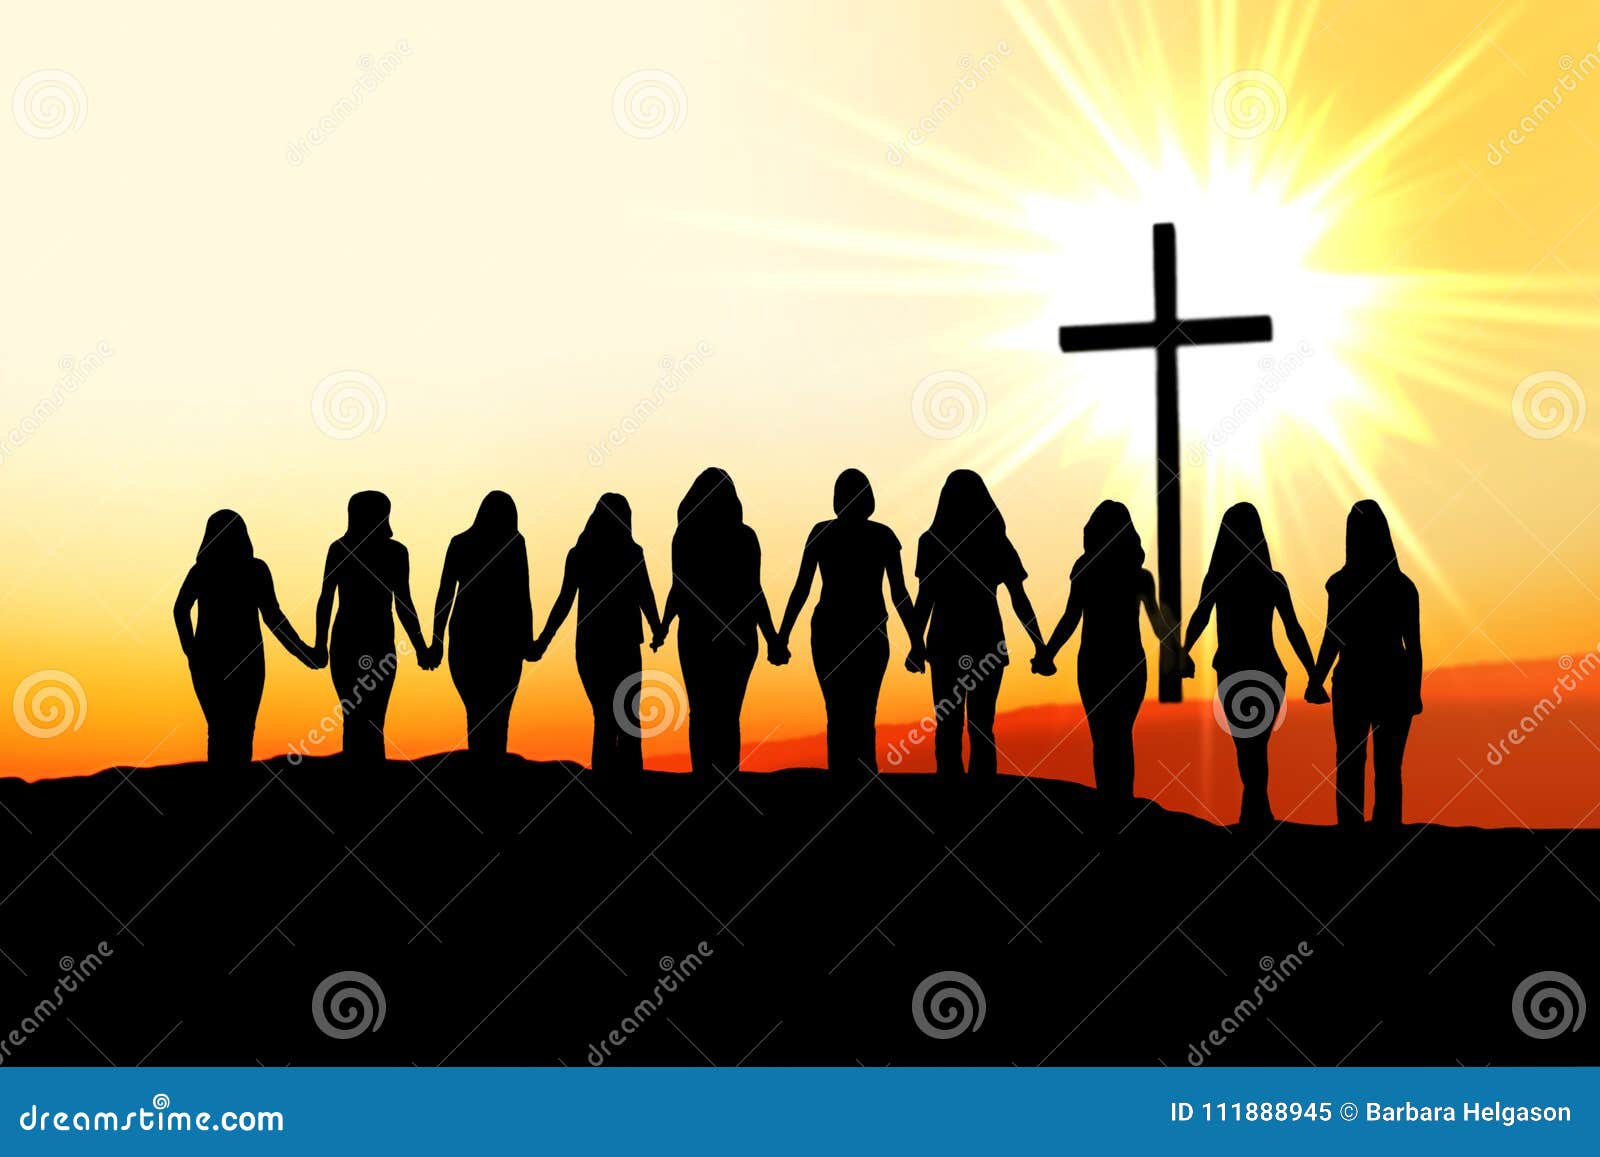 christian women friendship silhouette.